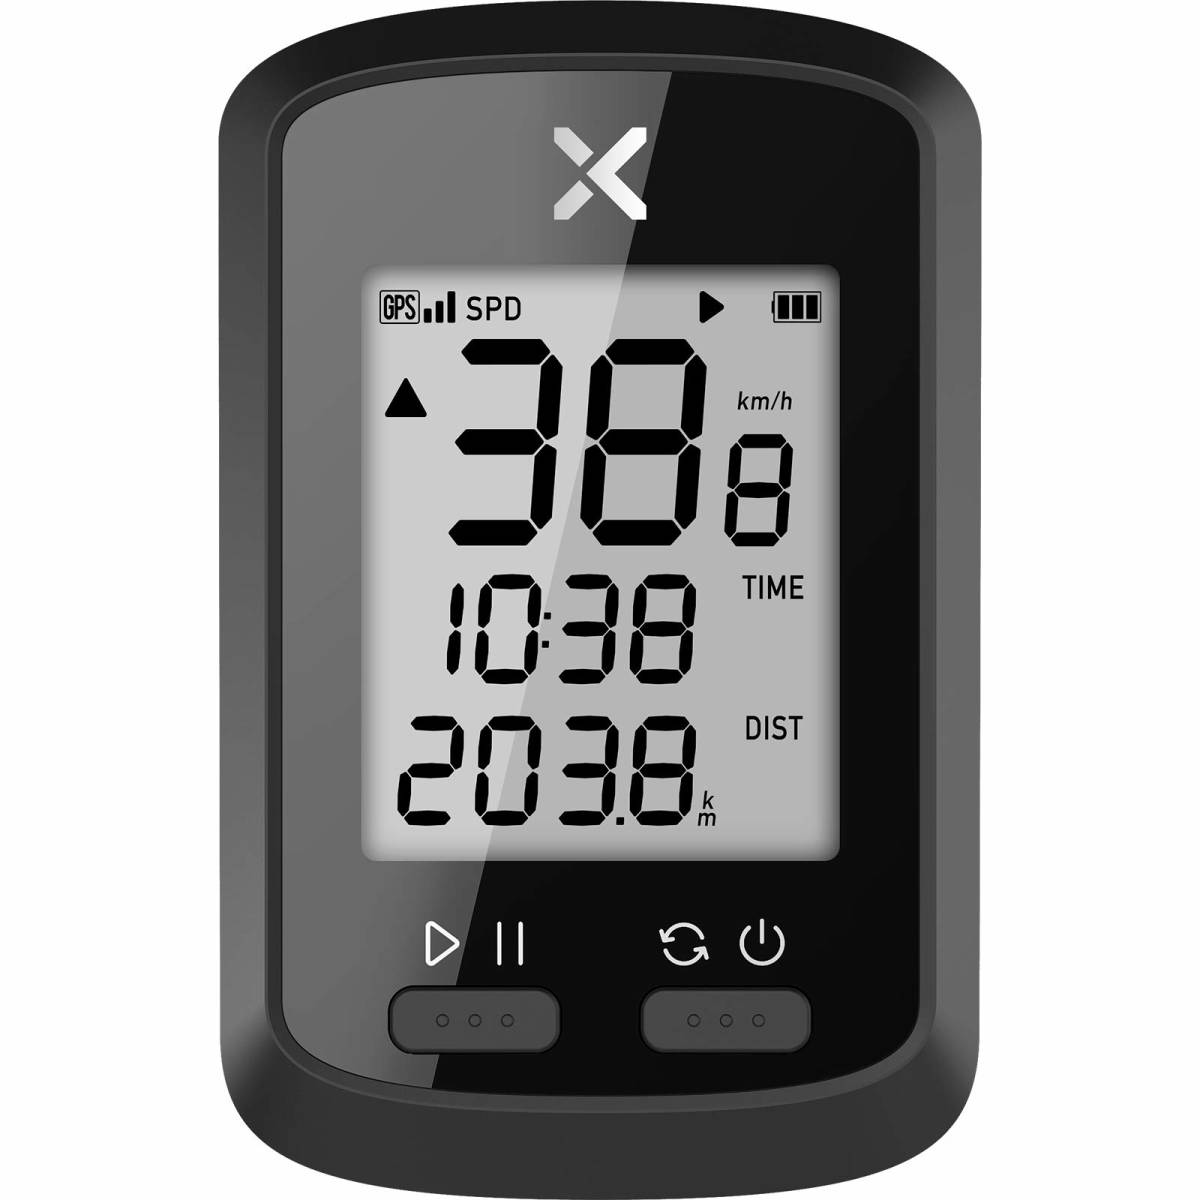 XOSS G+ GPS サイコン サイクルコンピュータ ワイヤレス サイクリングコンピュータ USB充電式 バッテリー内蔵 Bluetooth ANT+対応